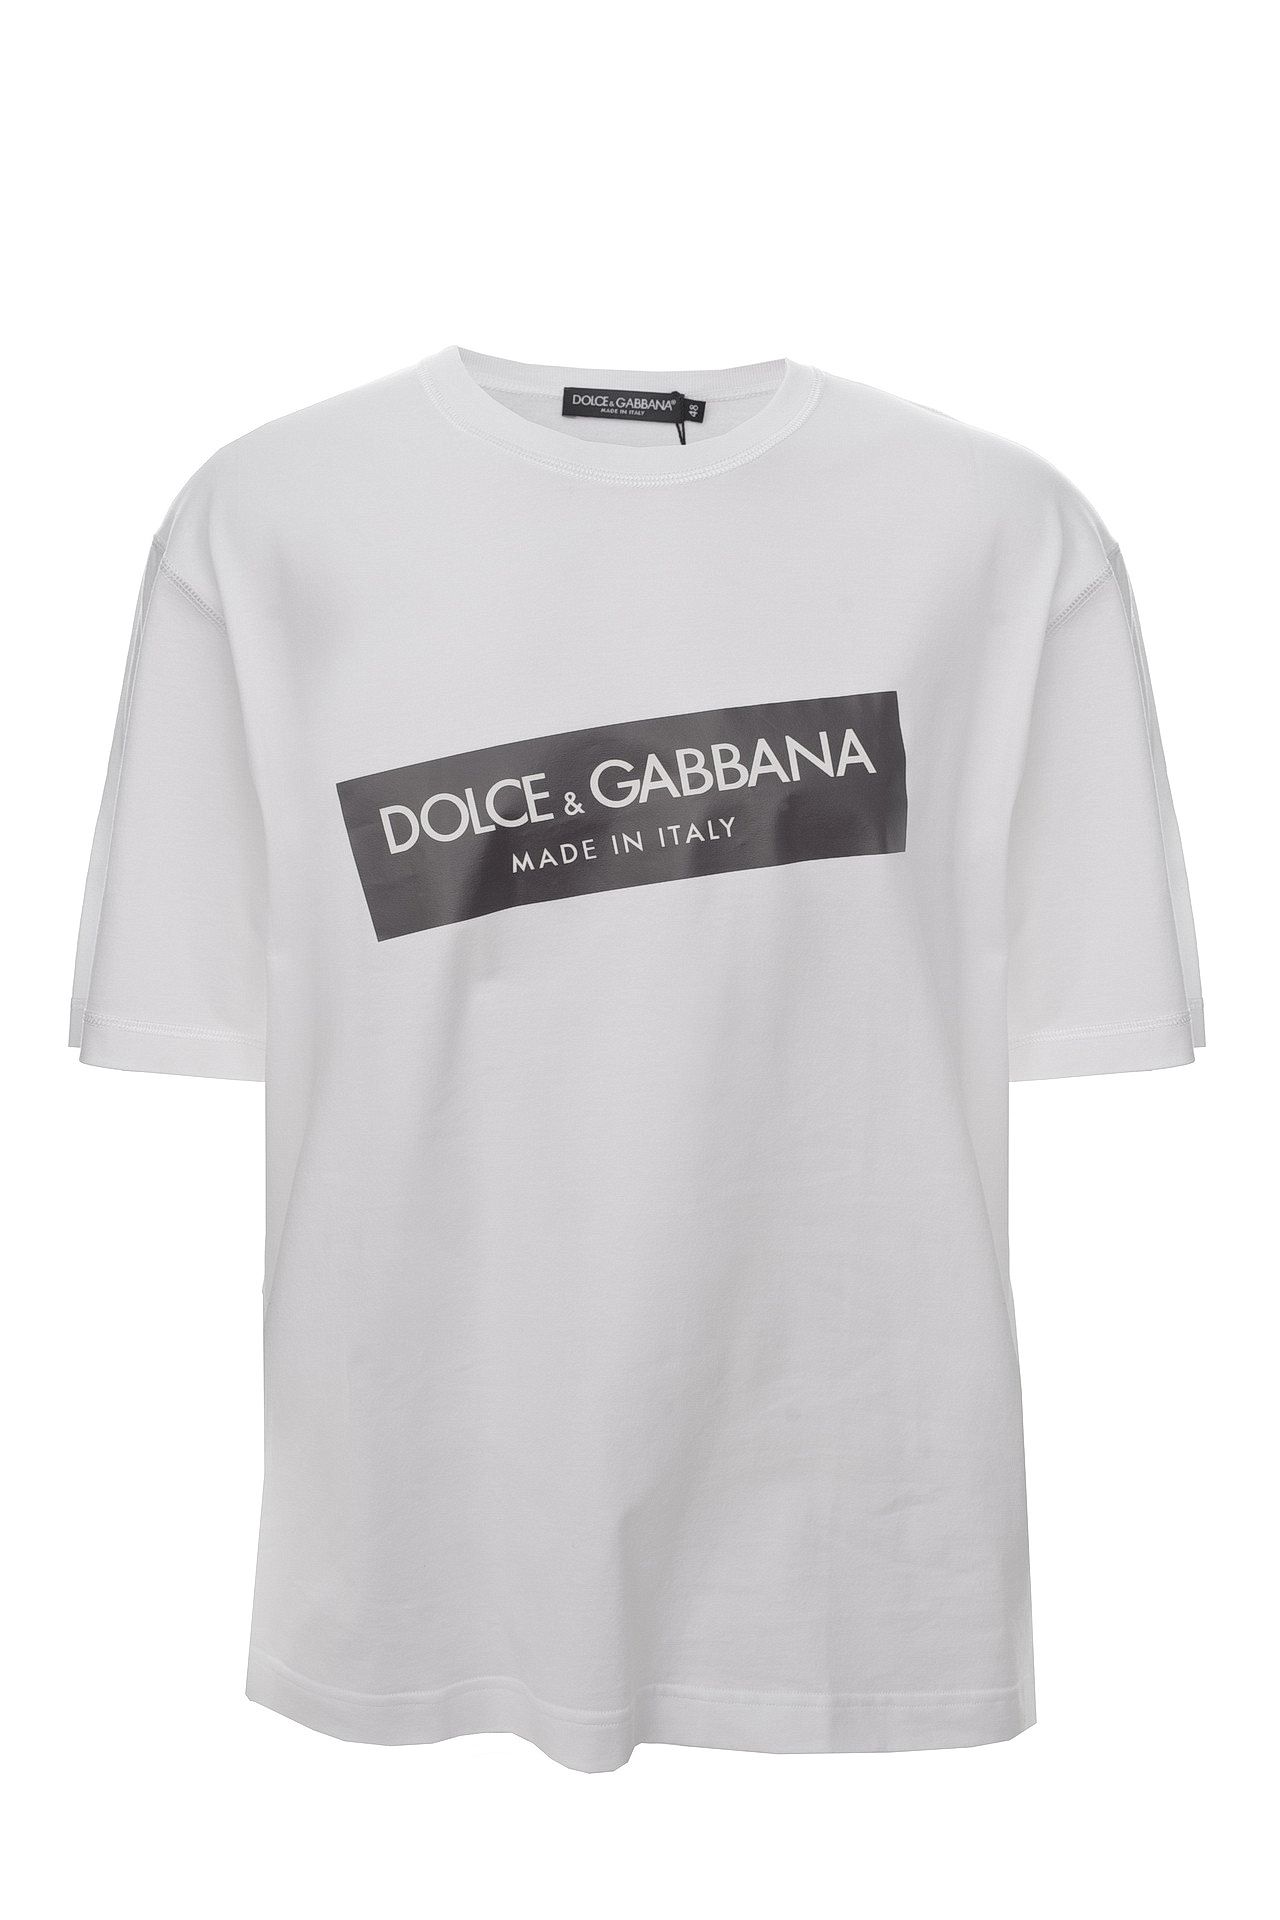 Одежда мужская Футболка DOLCE & GABBANA (G8HS4TFU7EQ/18.2). Купить за 21100 руб.